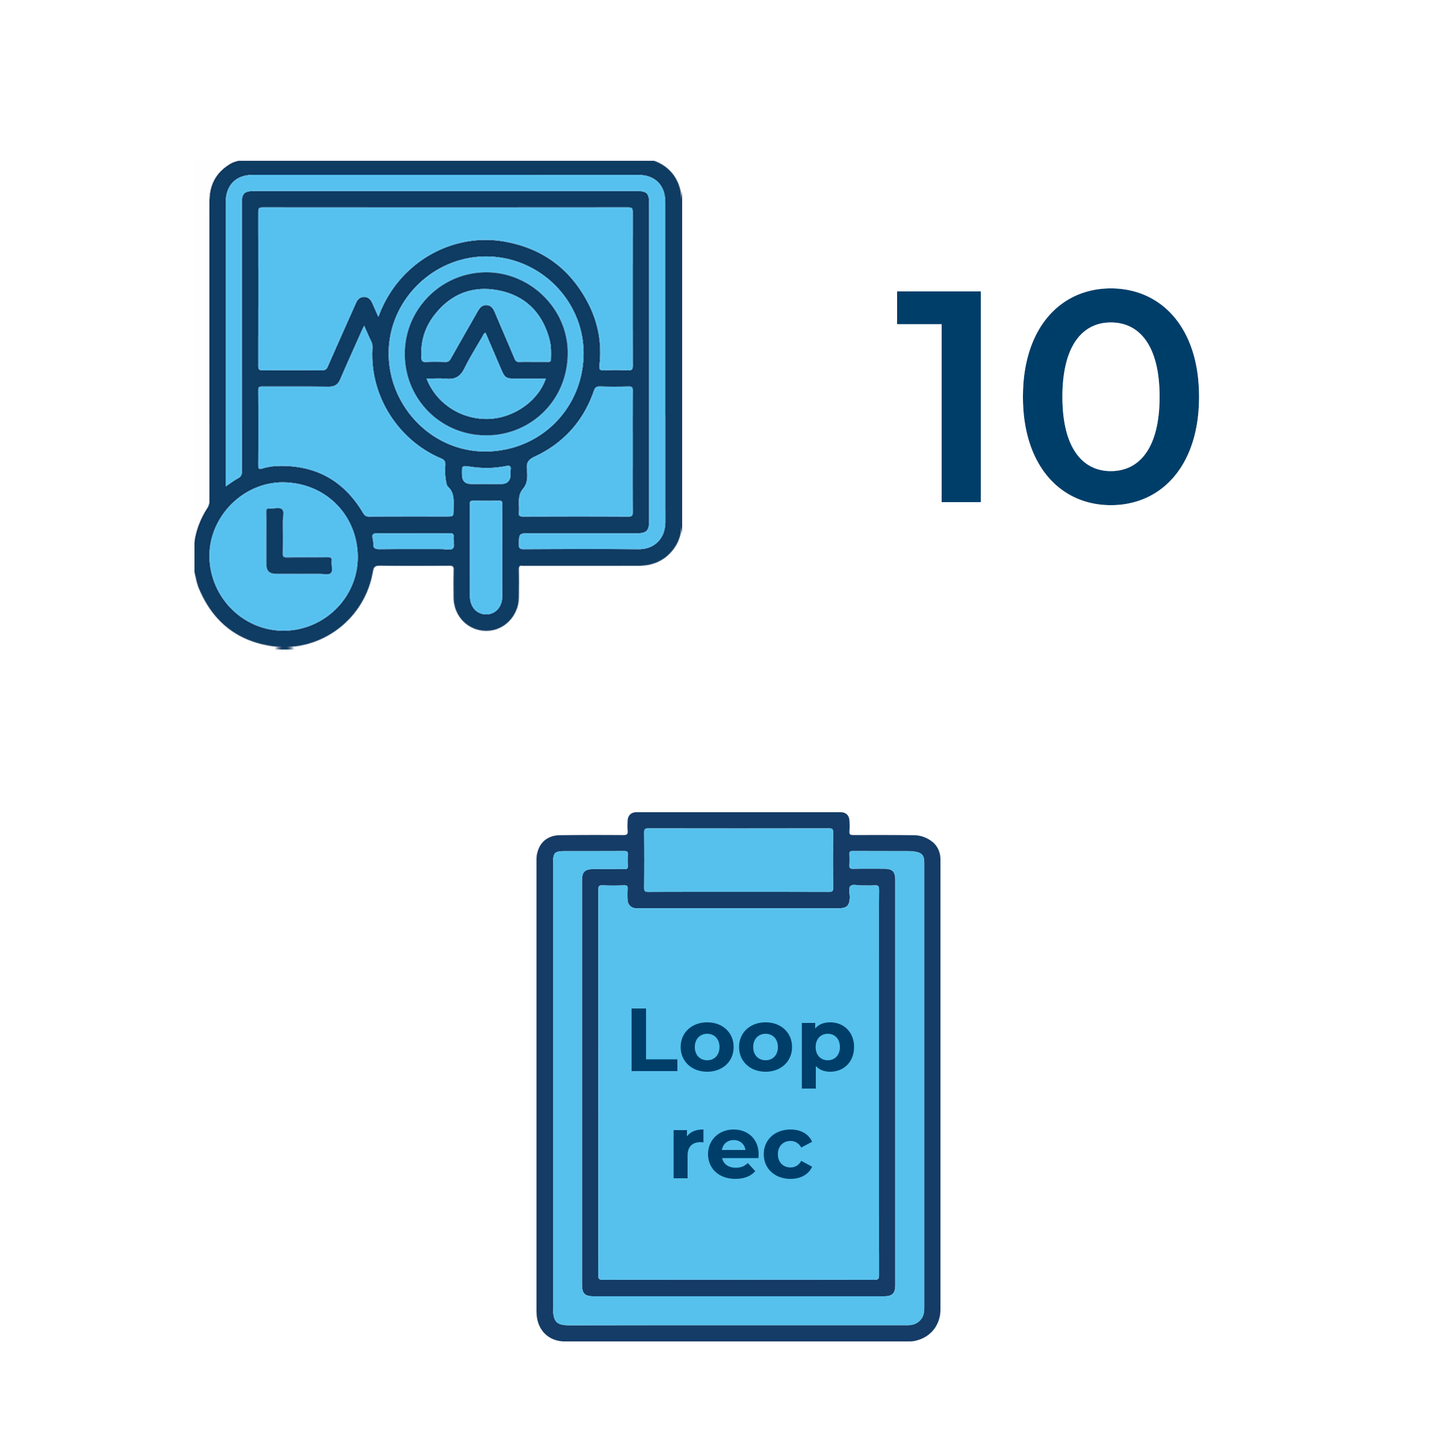 10 referti standard Loop recorder